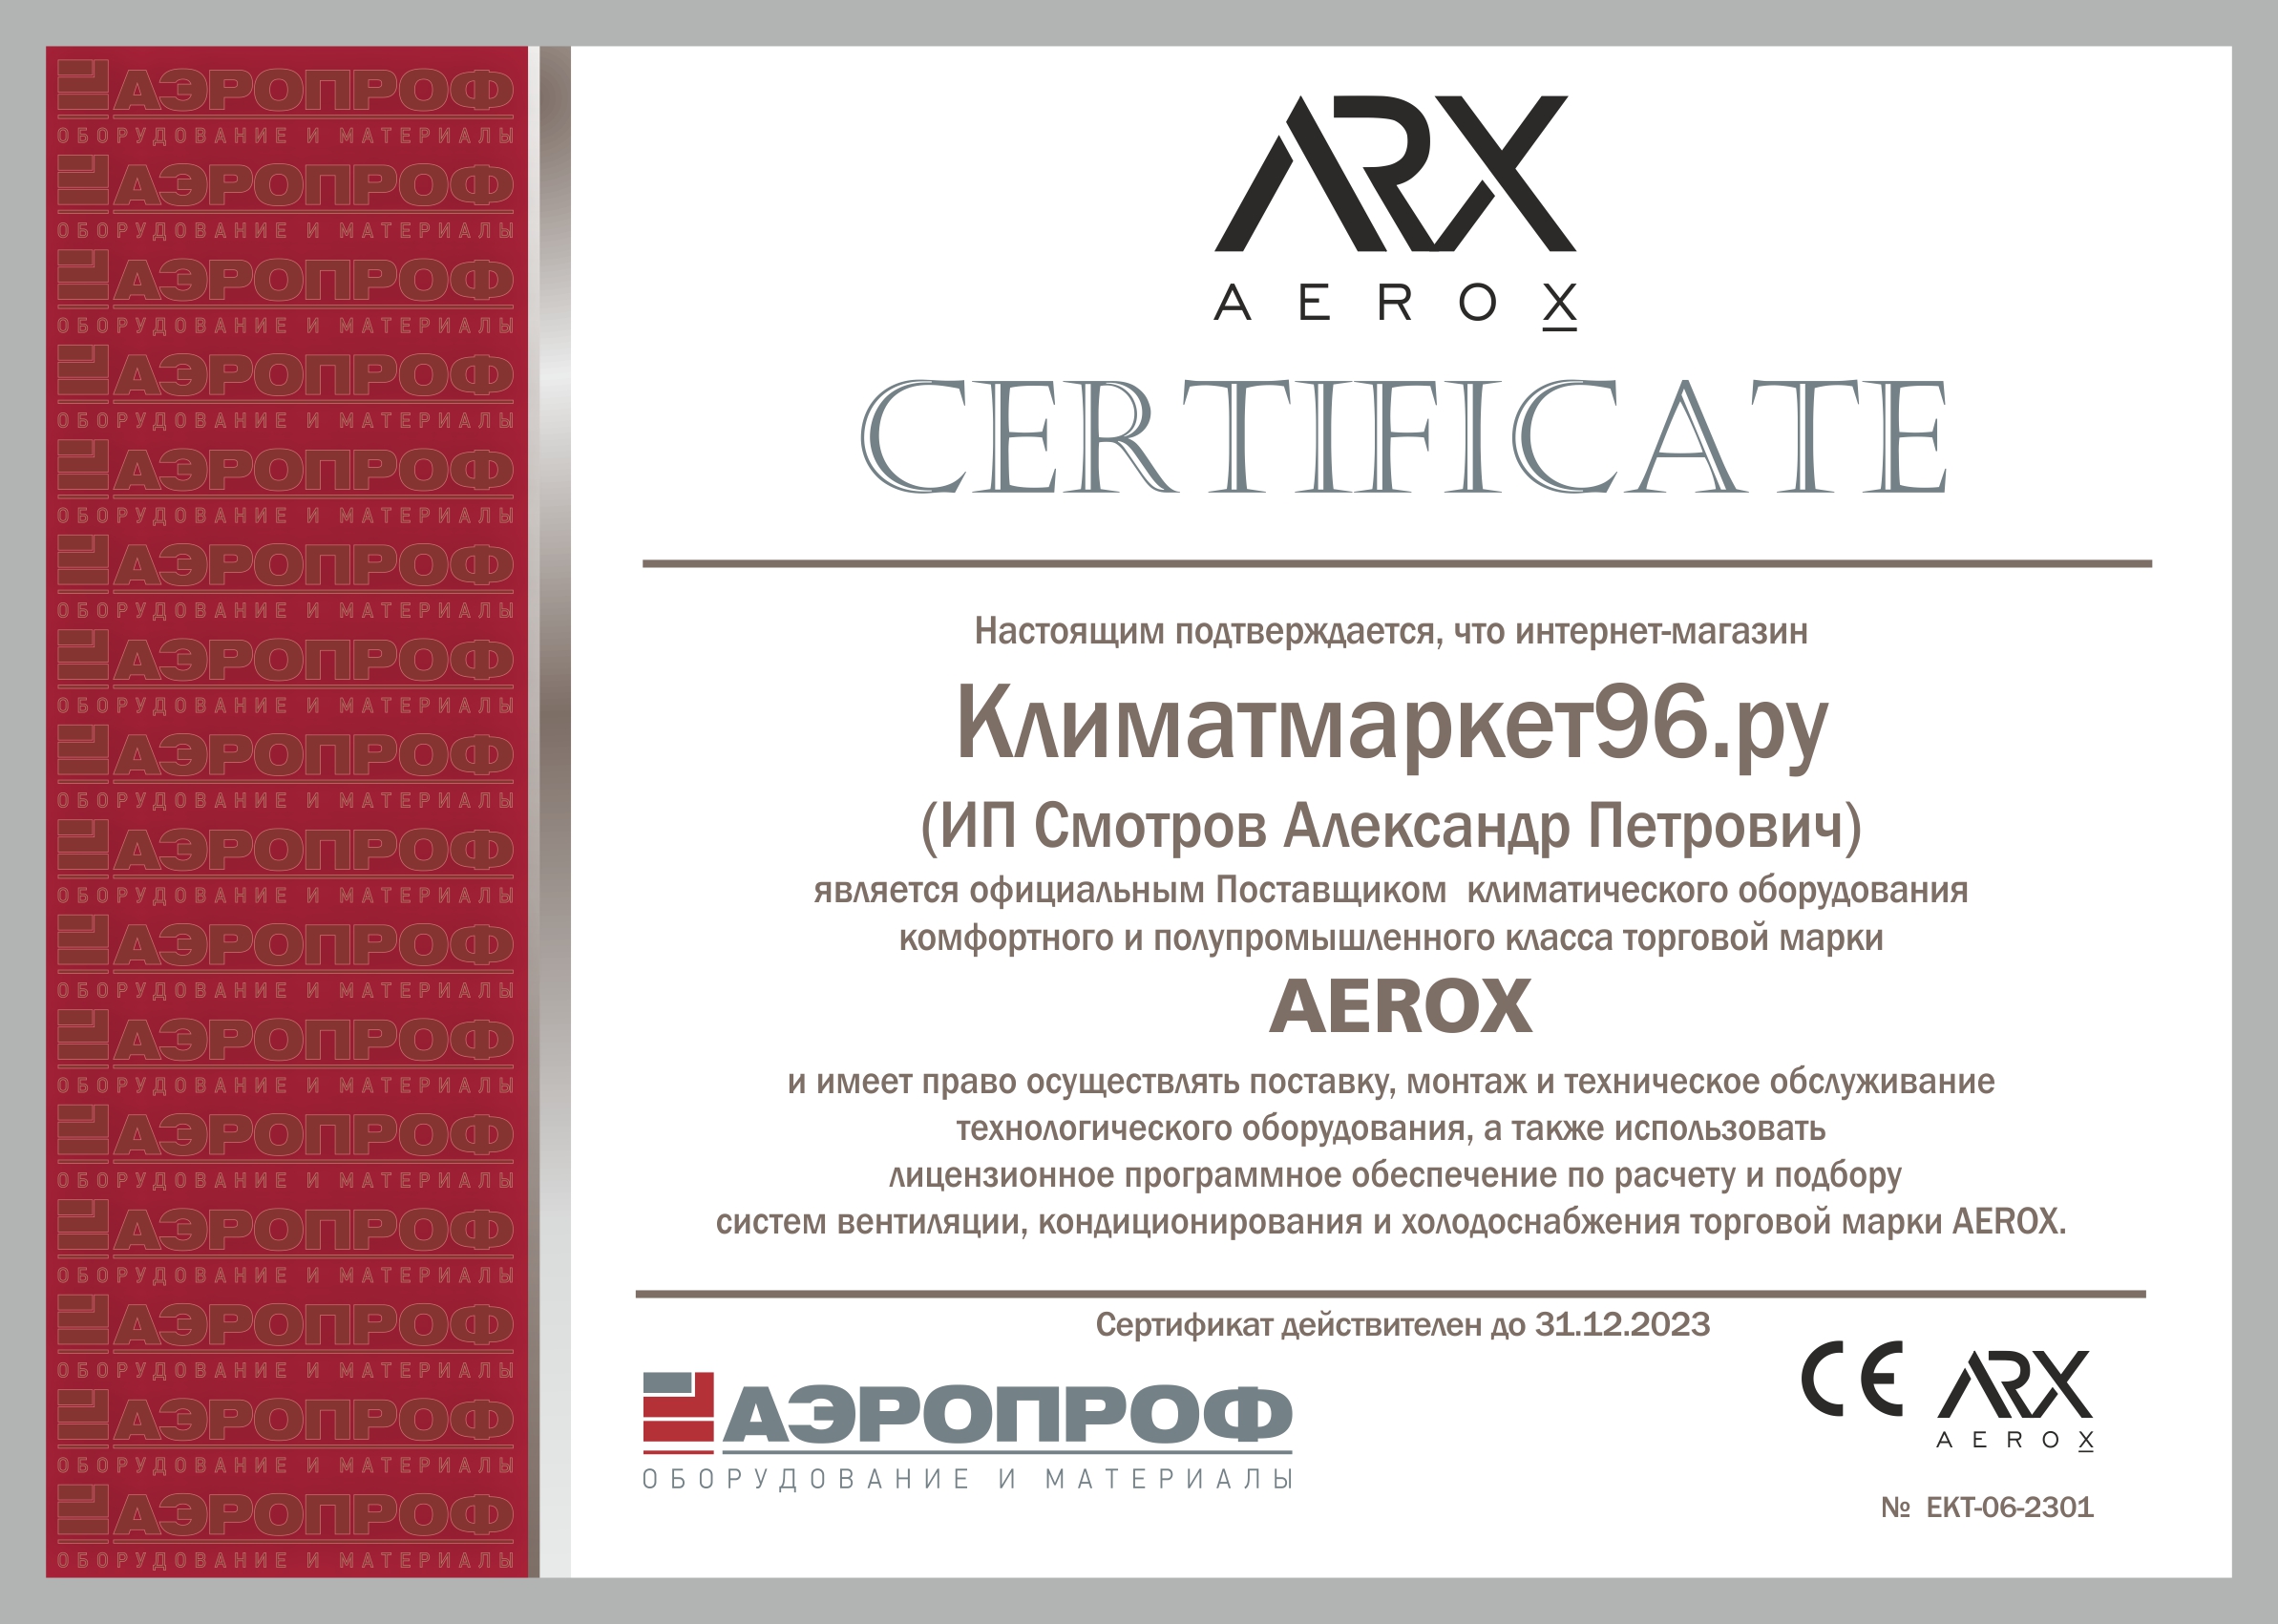 sert23-km96-arx Kondicioner Aero ALRS-II-36IHA4-01/ALRS-II-36OHA4-01 kypit v Ekaterinbyrge v internet-magazine KlimatMarket96.ry Сертификат официального дилера